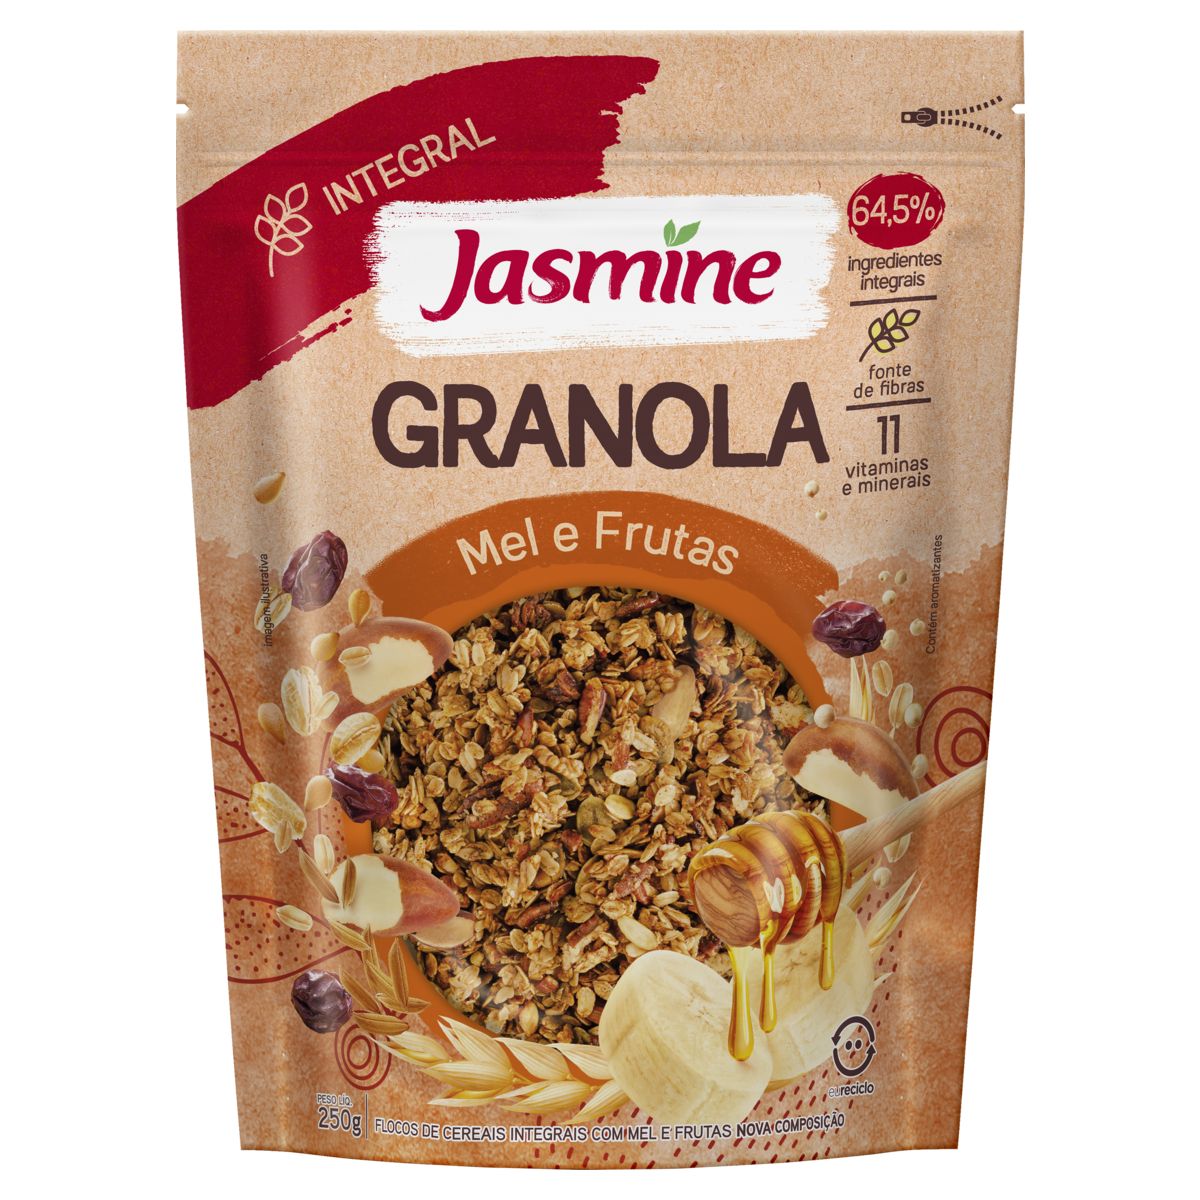 Granola Jasmine 64,5% Integral Mel e Frutas Pouch 250g